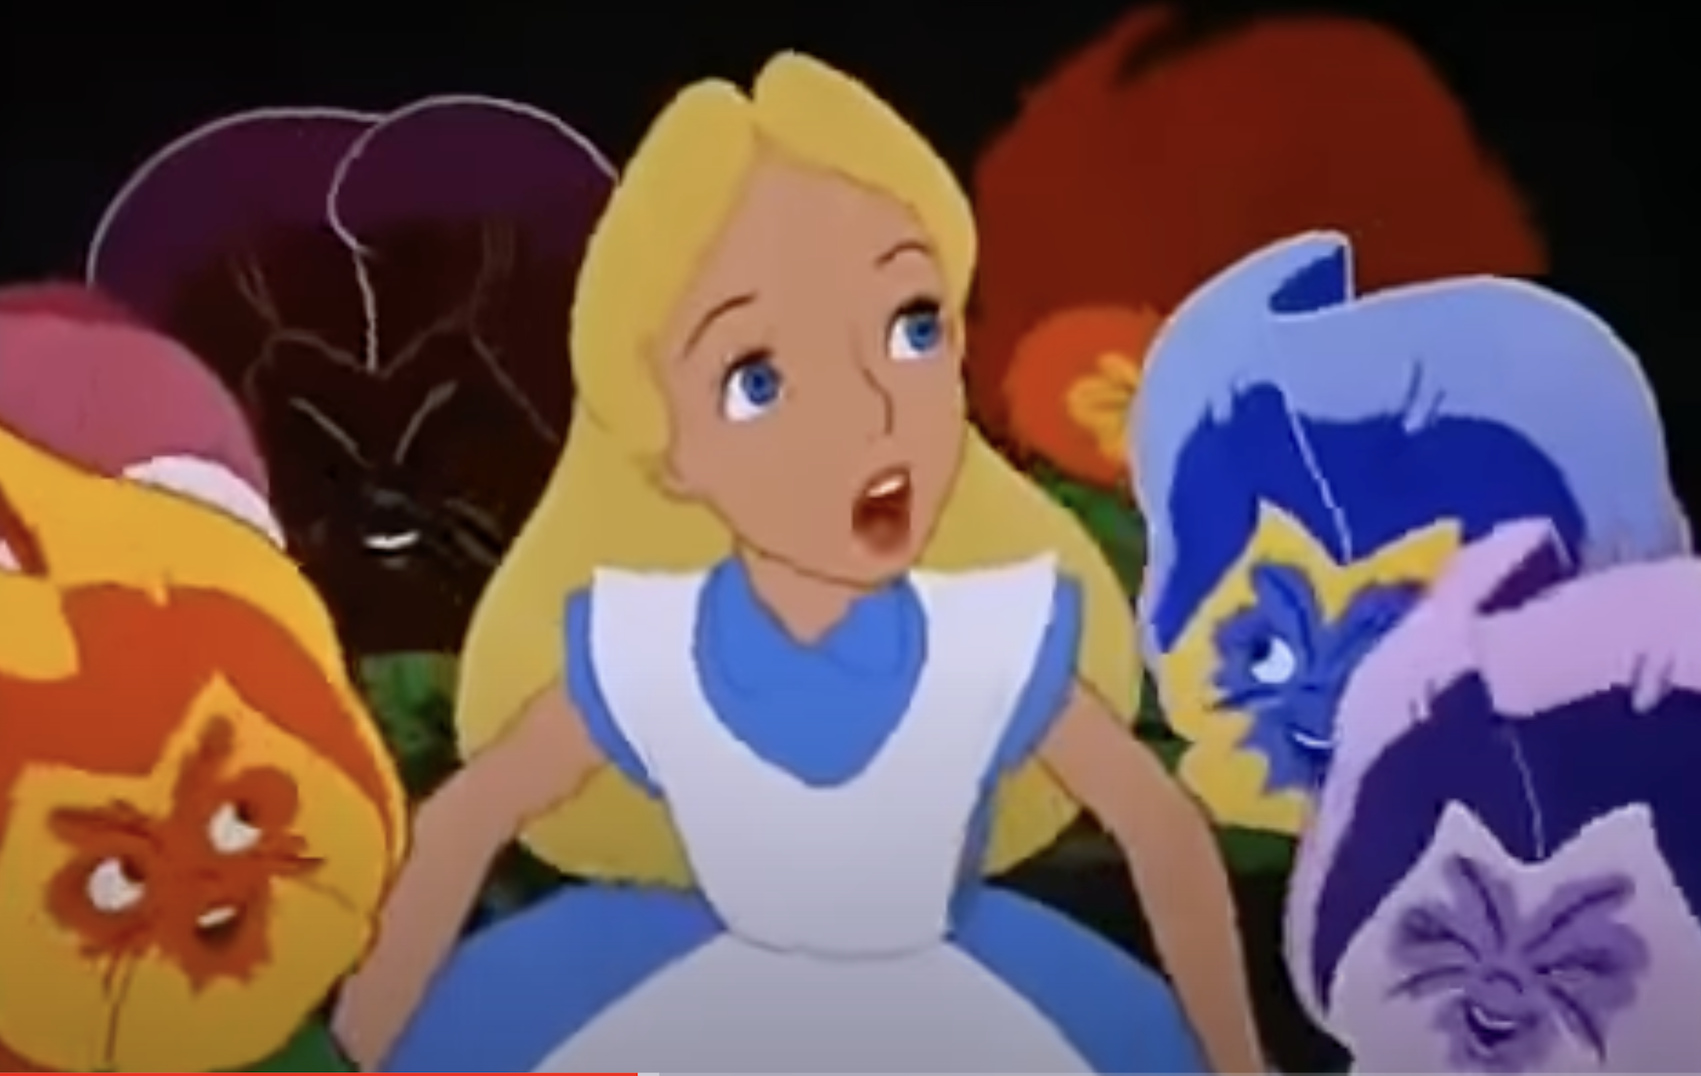 Alice in Wonderland pansies scene.